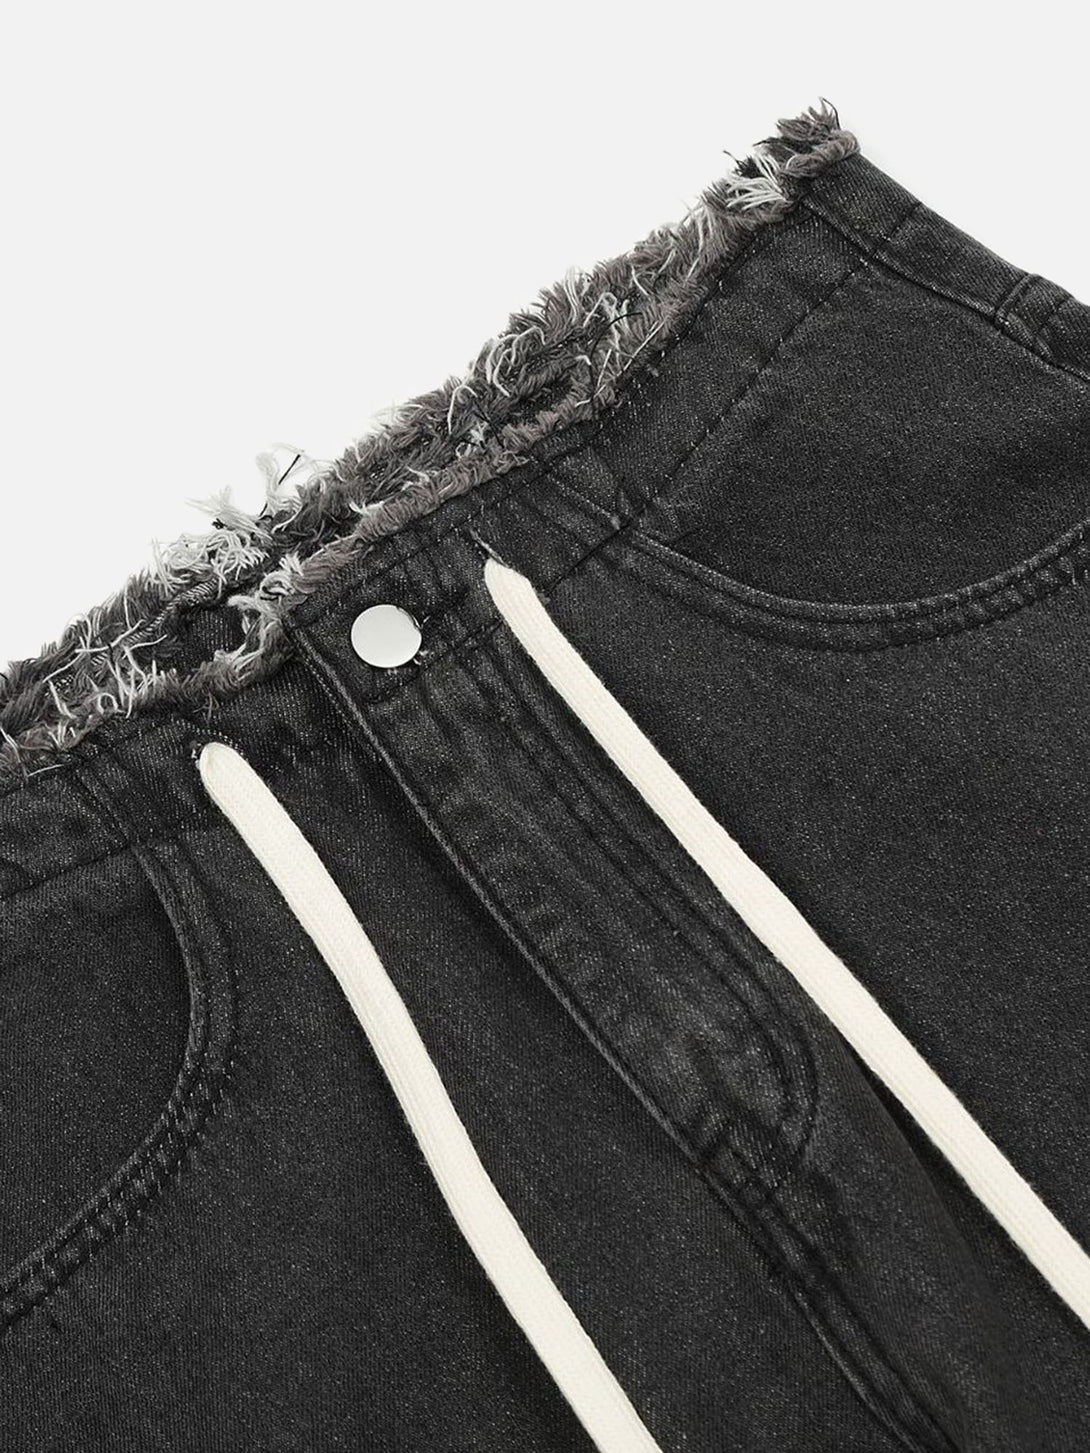 Majesda® - High Street Distressed Washed Distressed Drawstring Jeans- Outfit Ideas - Streetwear Fashion - majesda.com